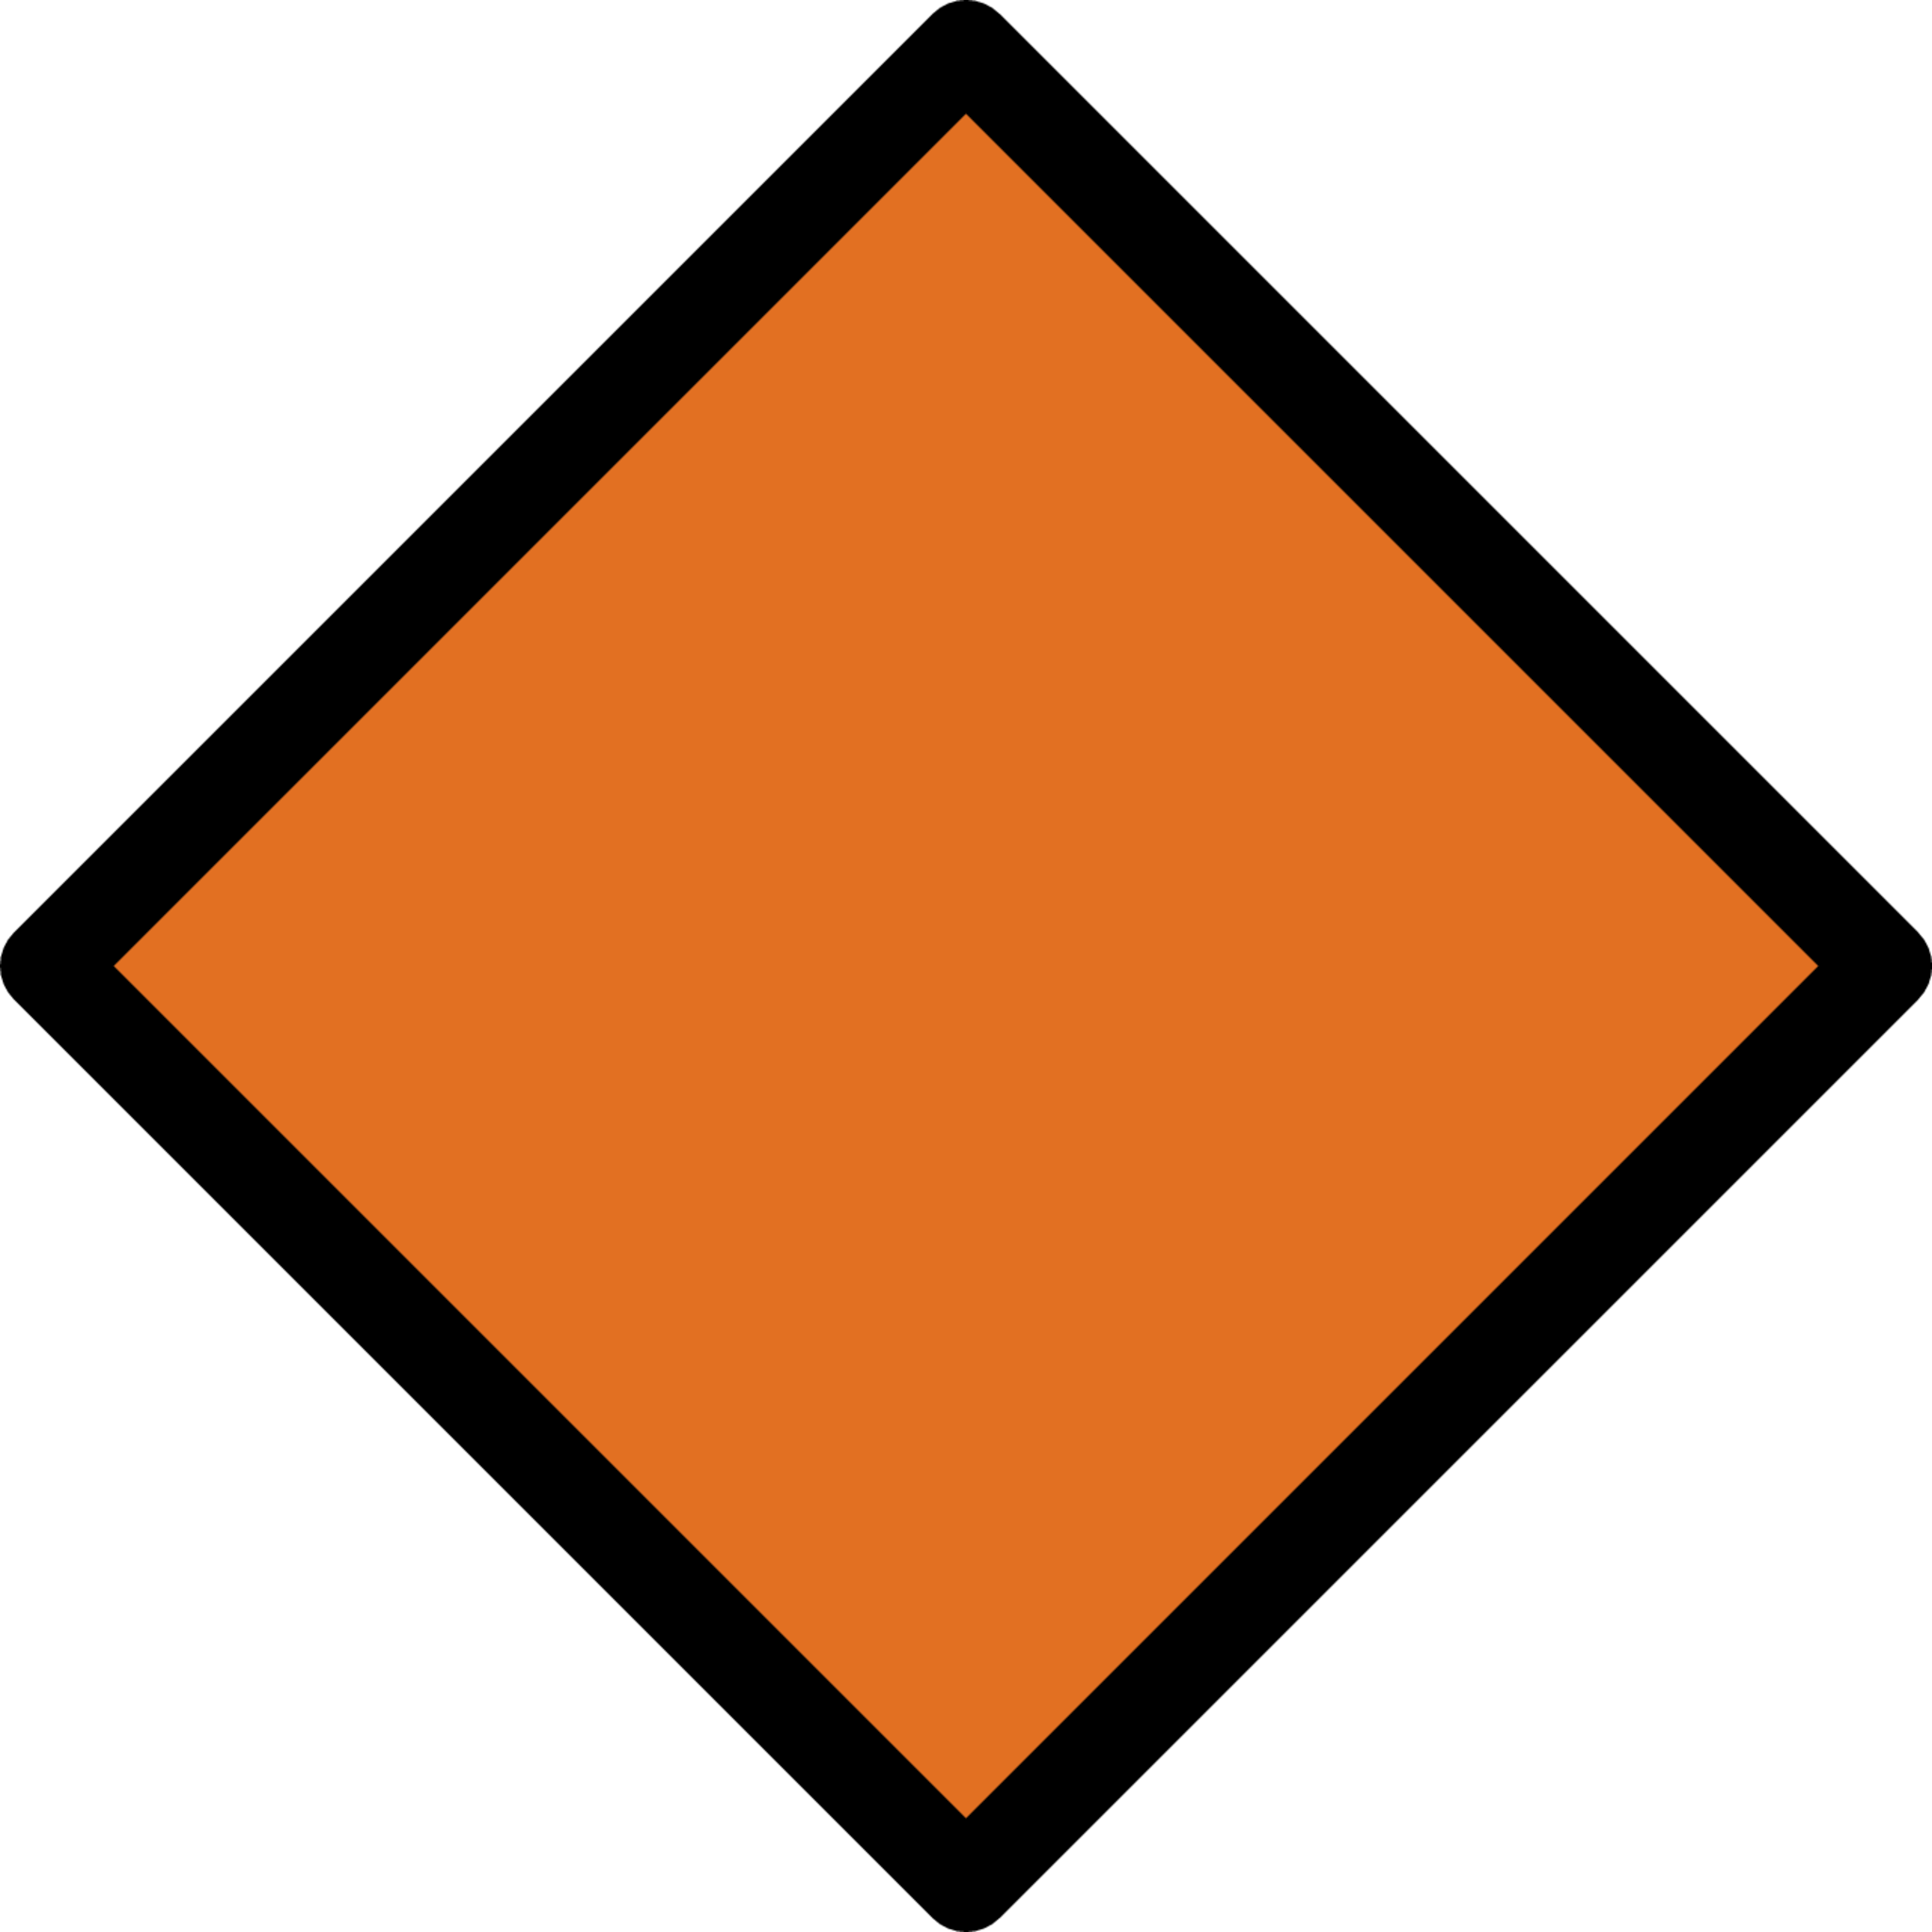 small orange diamond emoji